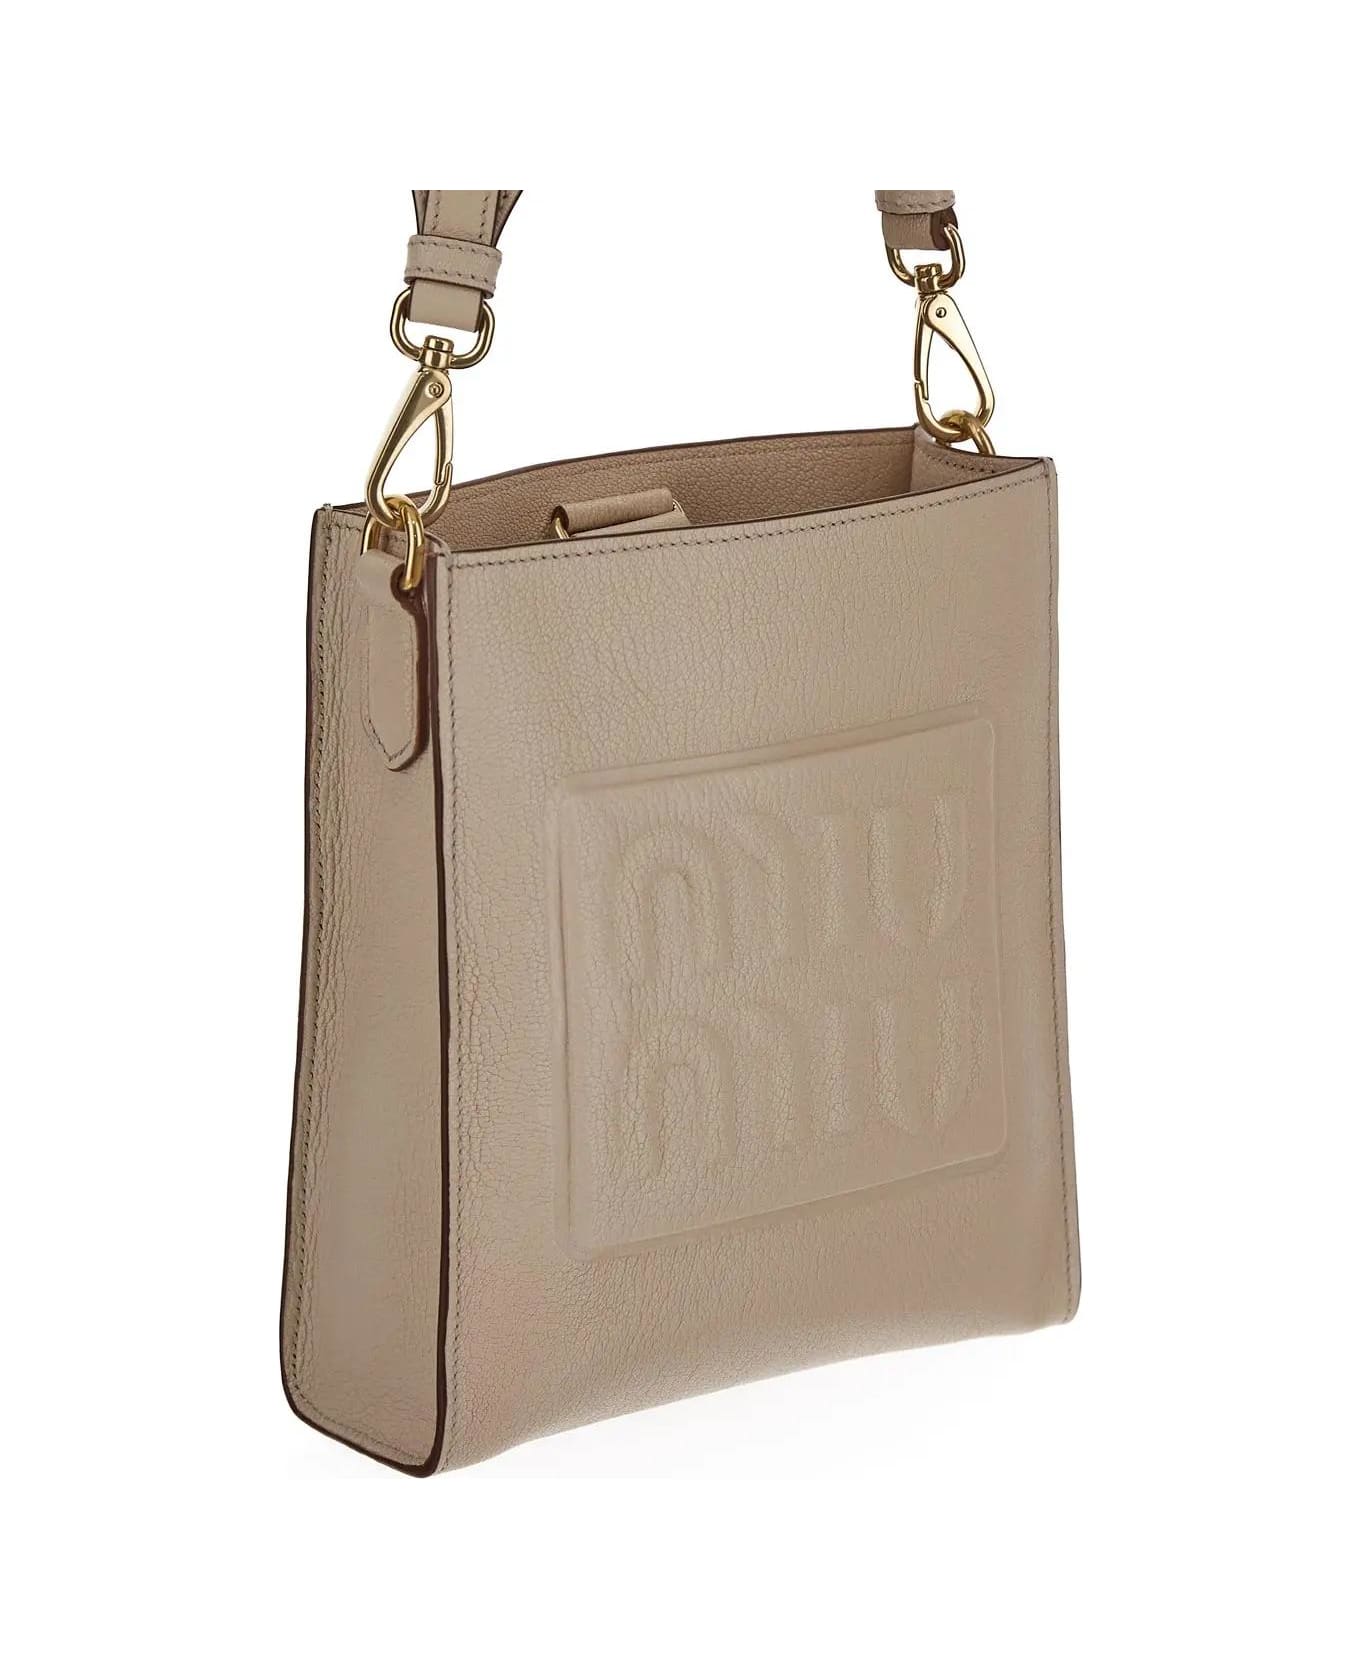 Miu Miu Leather Bag - Ivory